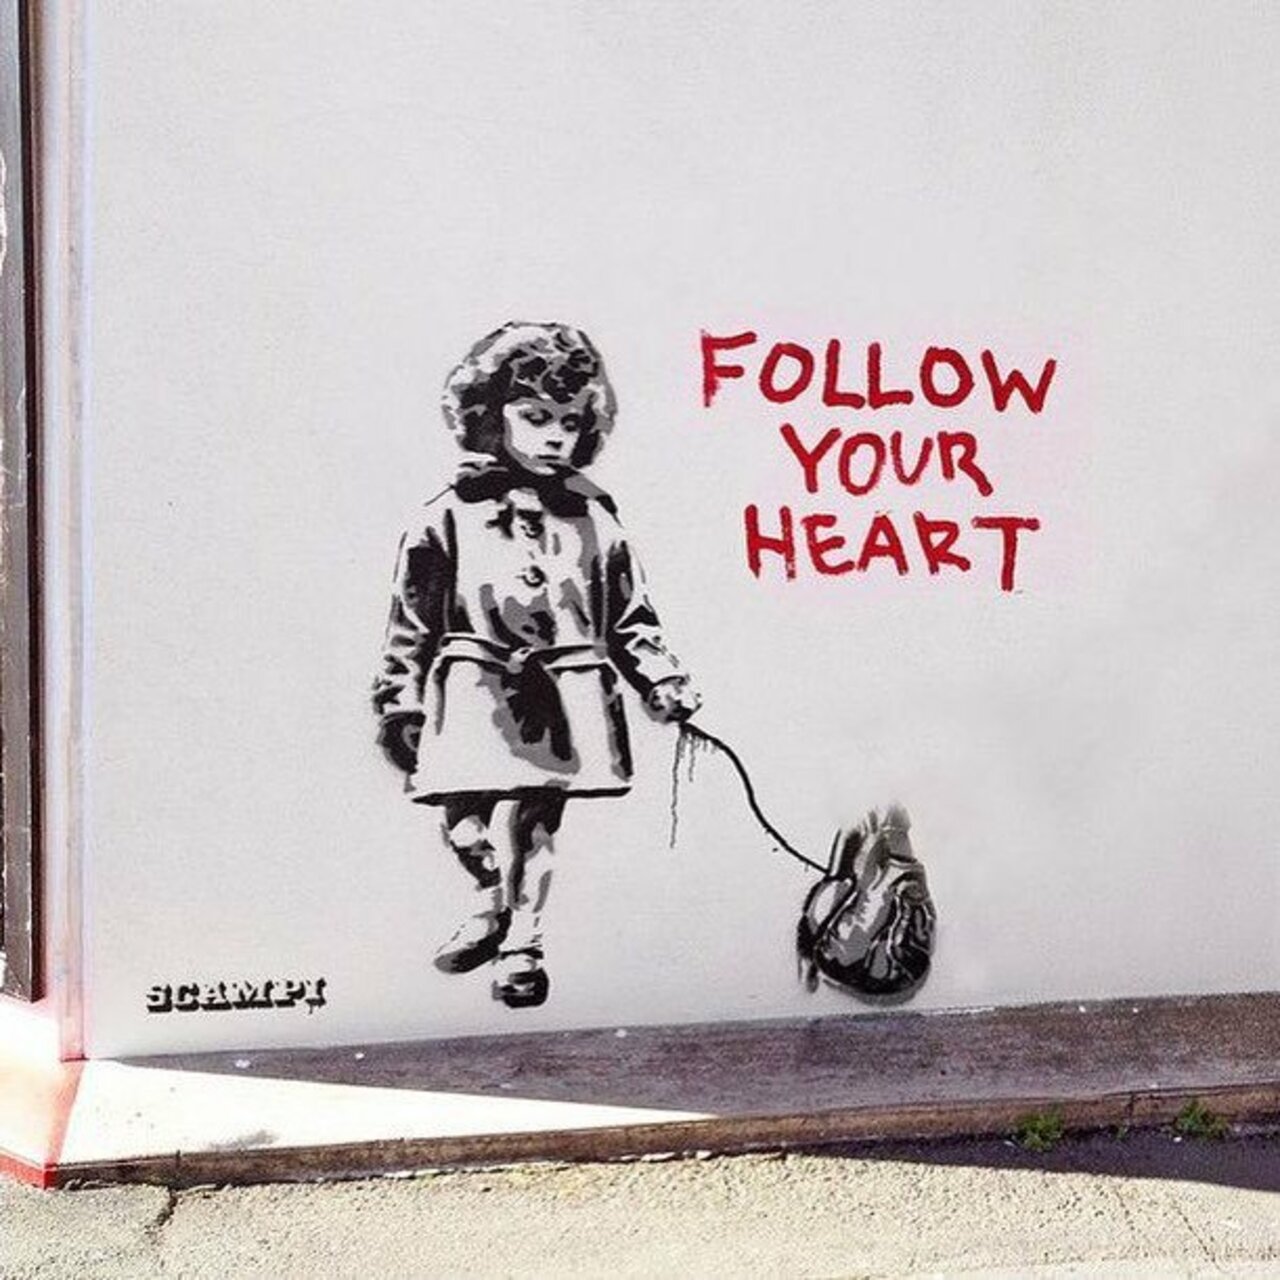 RT @StArtEverywhere: Mon cœur #kid #street #streetart #streetartparis #graff #graffiti #wallart #sprayart #urban #urbain #urbanart #urba… https://t.co/FStlTB94KL